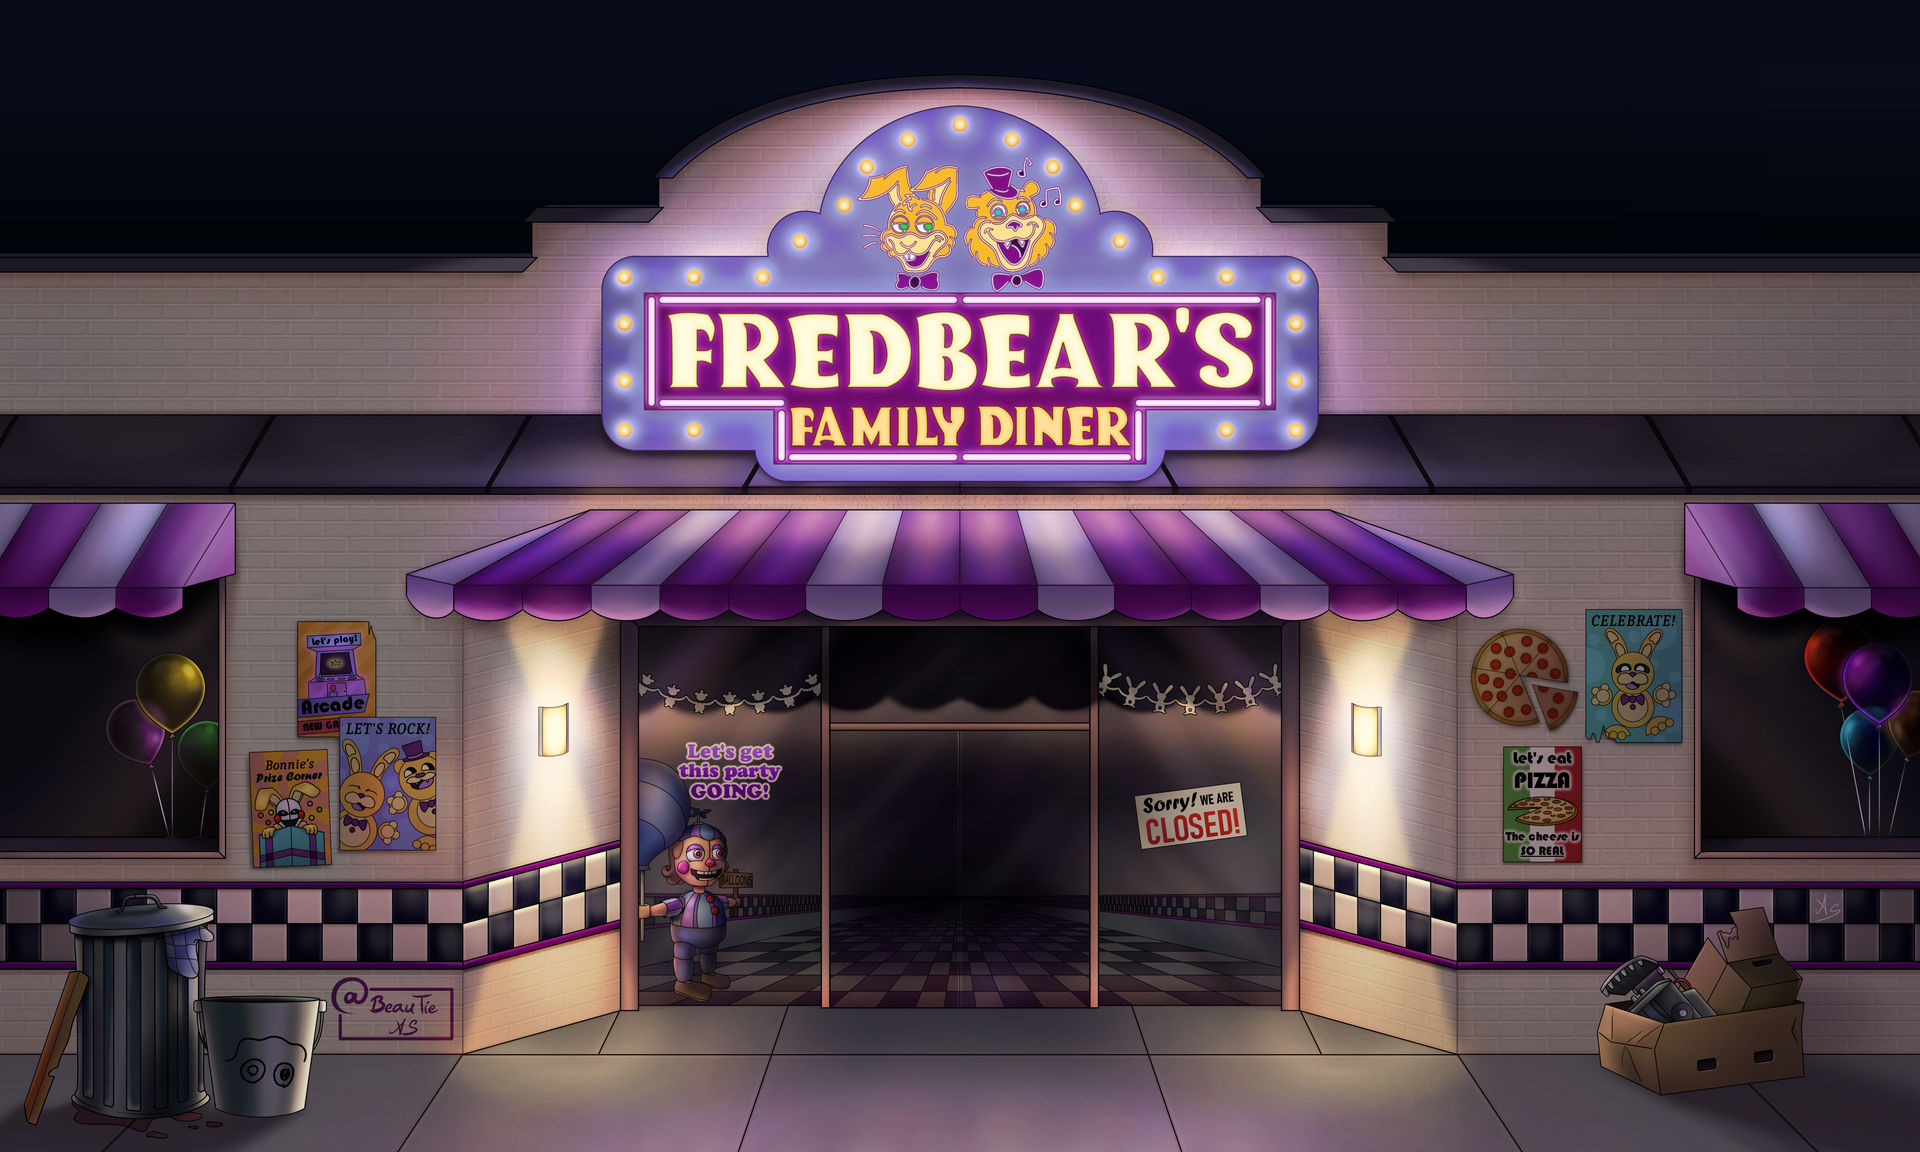 ArtStation - Fredbear's Family Diner prologue Fredbear